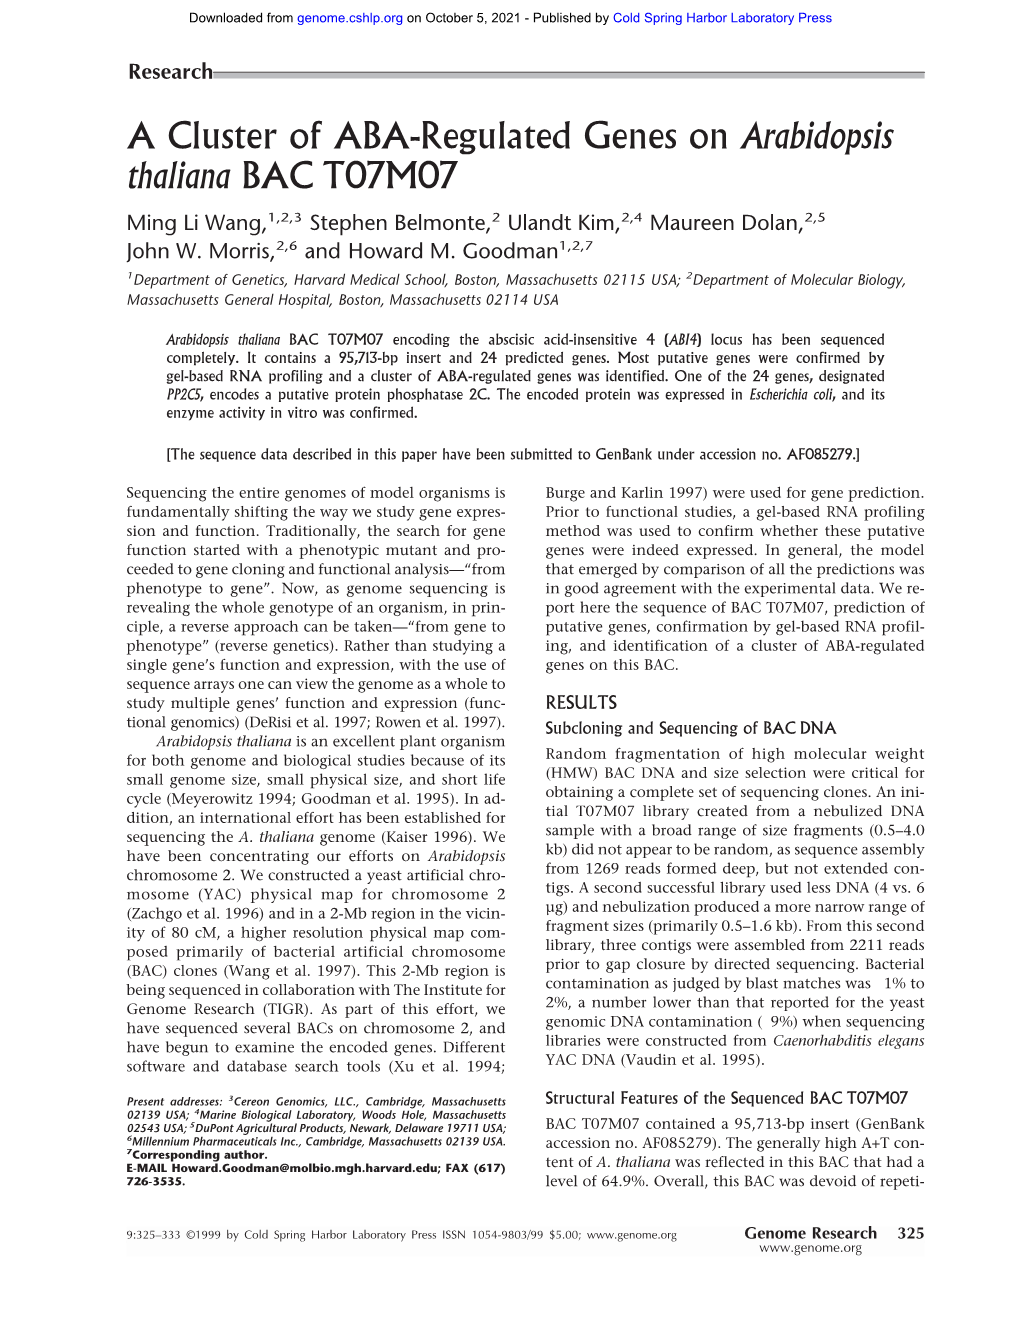 A Cluster of ABA-Regulated Genes on Arabidopsis Thaliana BAC T07M07 Ming Li Wang,1,2,3 Stephen Belmonte,2 Ulandt Kim,2,4 Maureen Dolan,2,5 John W